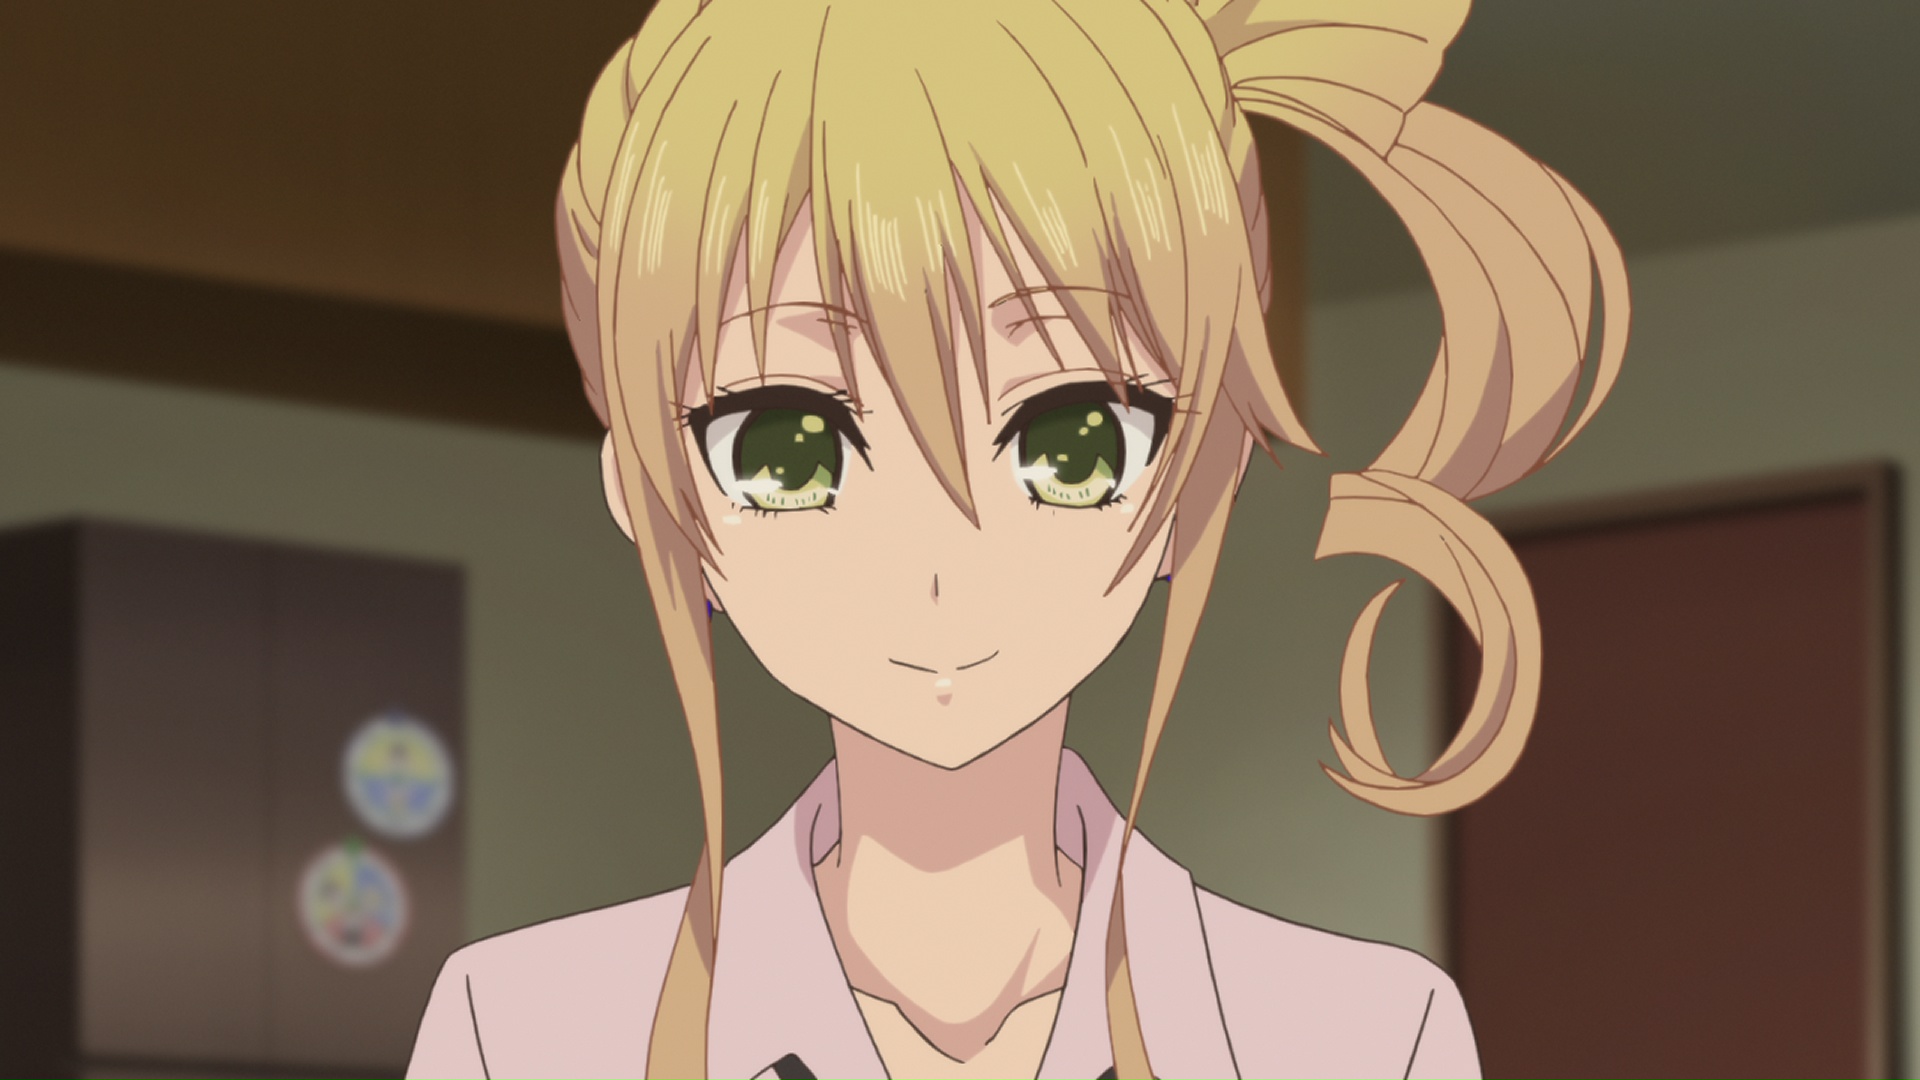 Watch citrus Season 1 Episode 9 Sub & Dub | Anime Simulcast | Funimation